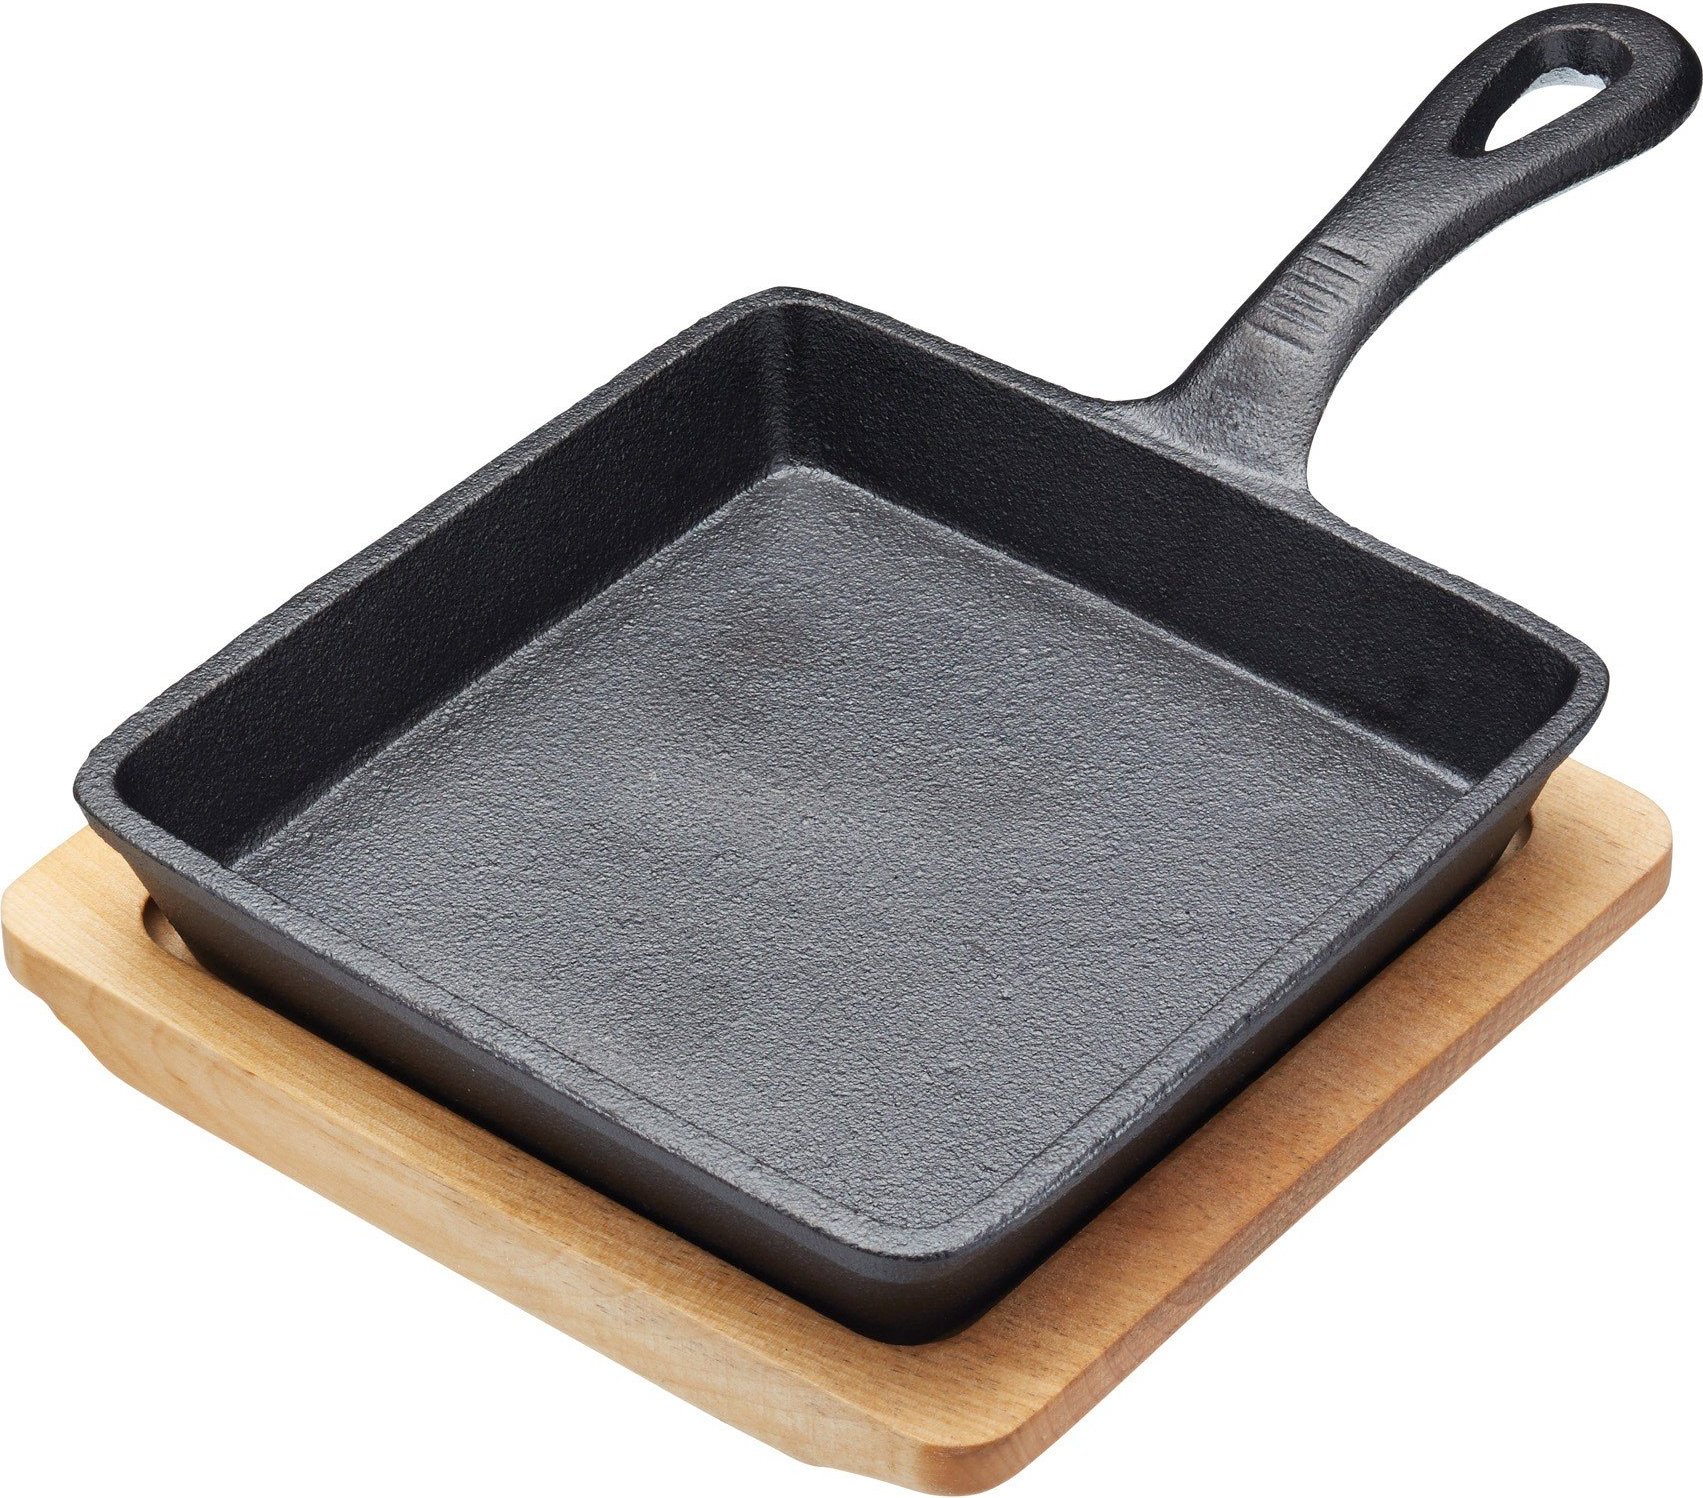 Artesa Cast iron skillet with serving board - Kitchen Craft